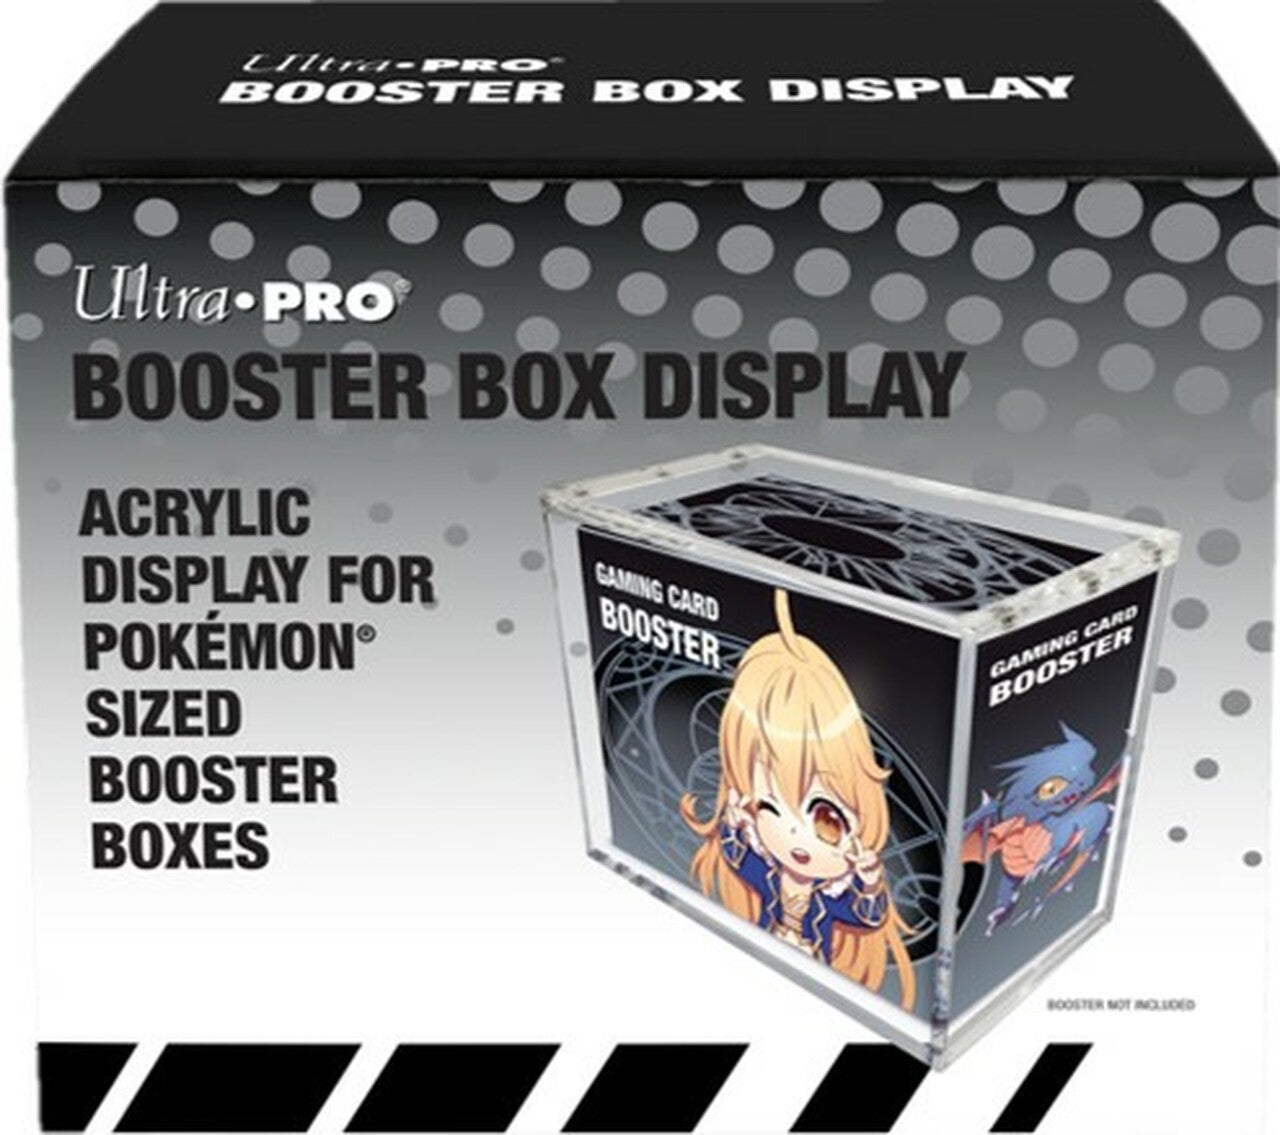 Ultra-Pro Acrylic Booster Box Display for Pokémon